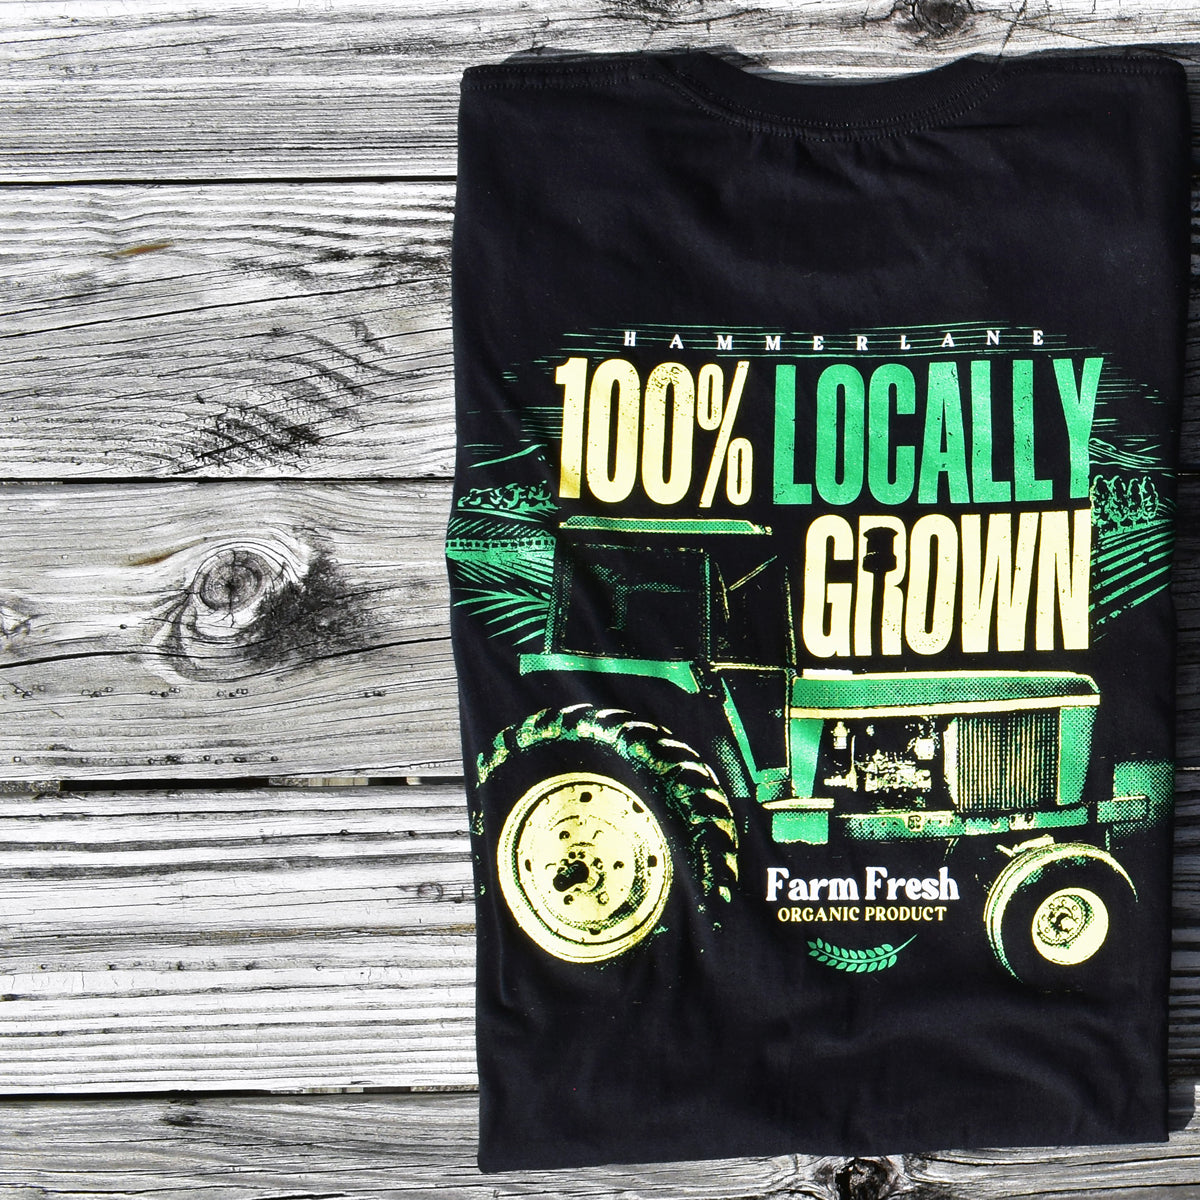 Locally Grown Hammer Lane T-Shirt